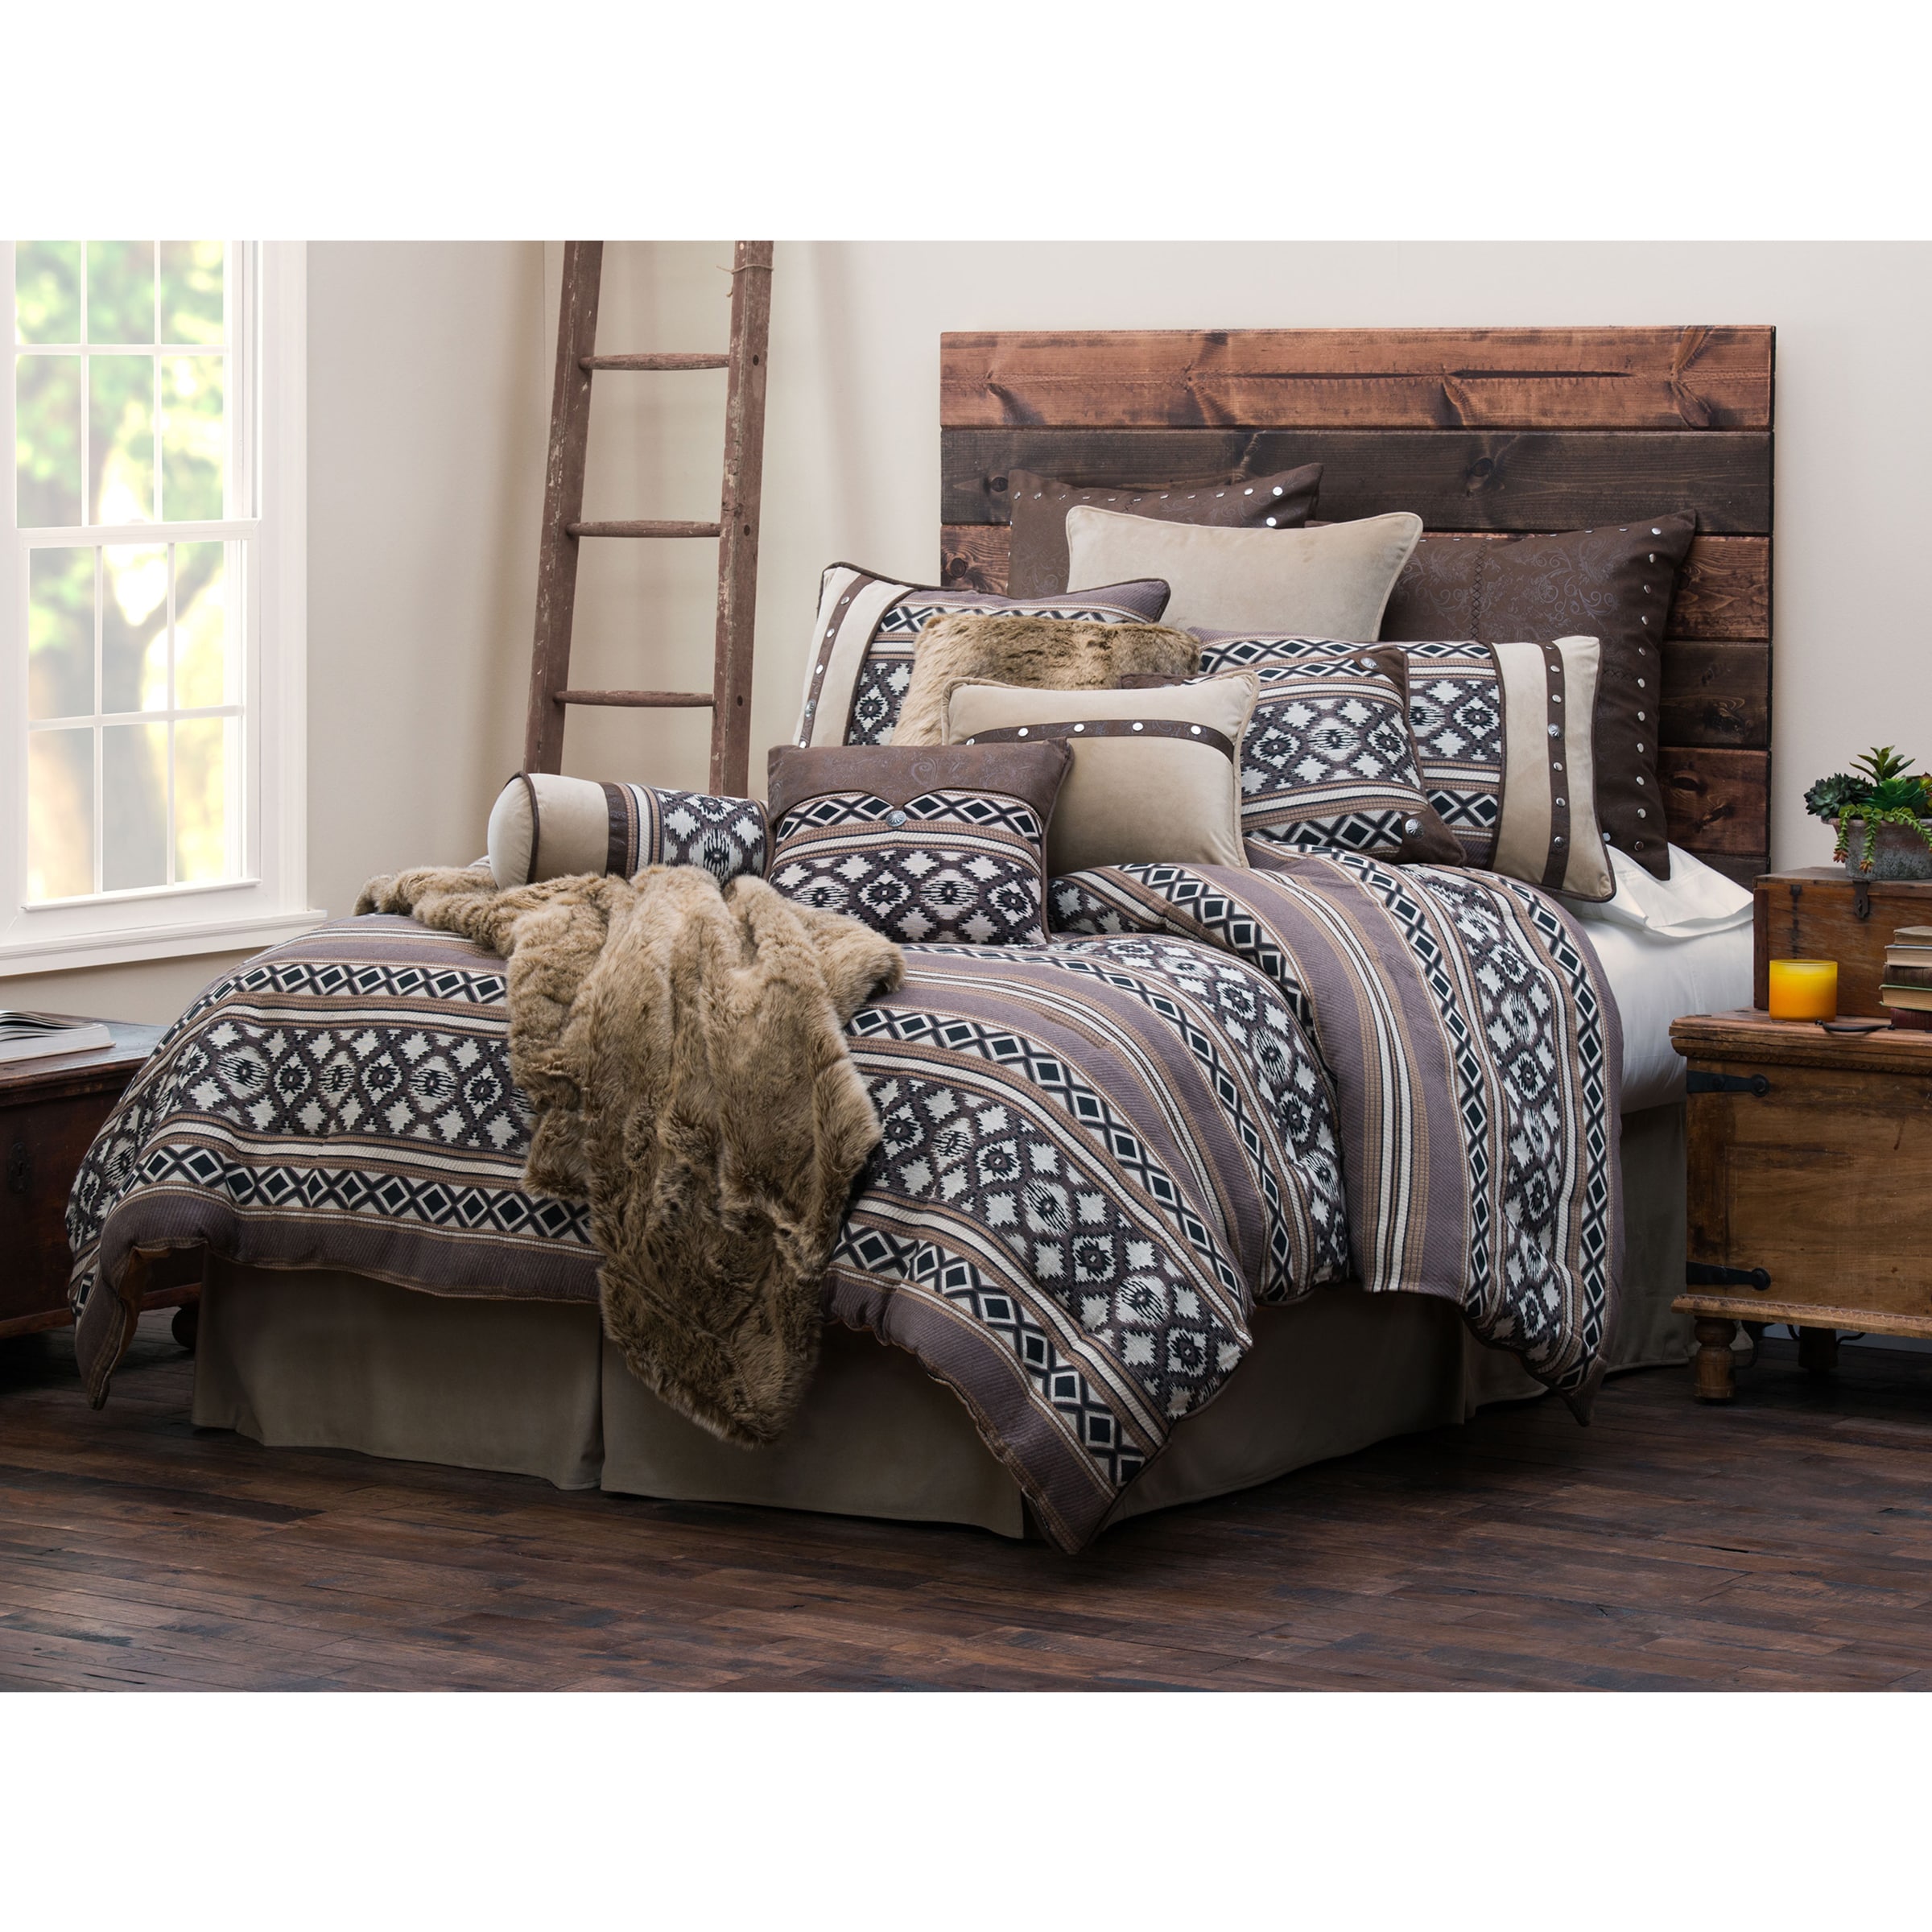 Hiend Accents Tucson 5 Piece Comforter Set Overstock 10108611